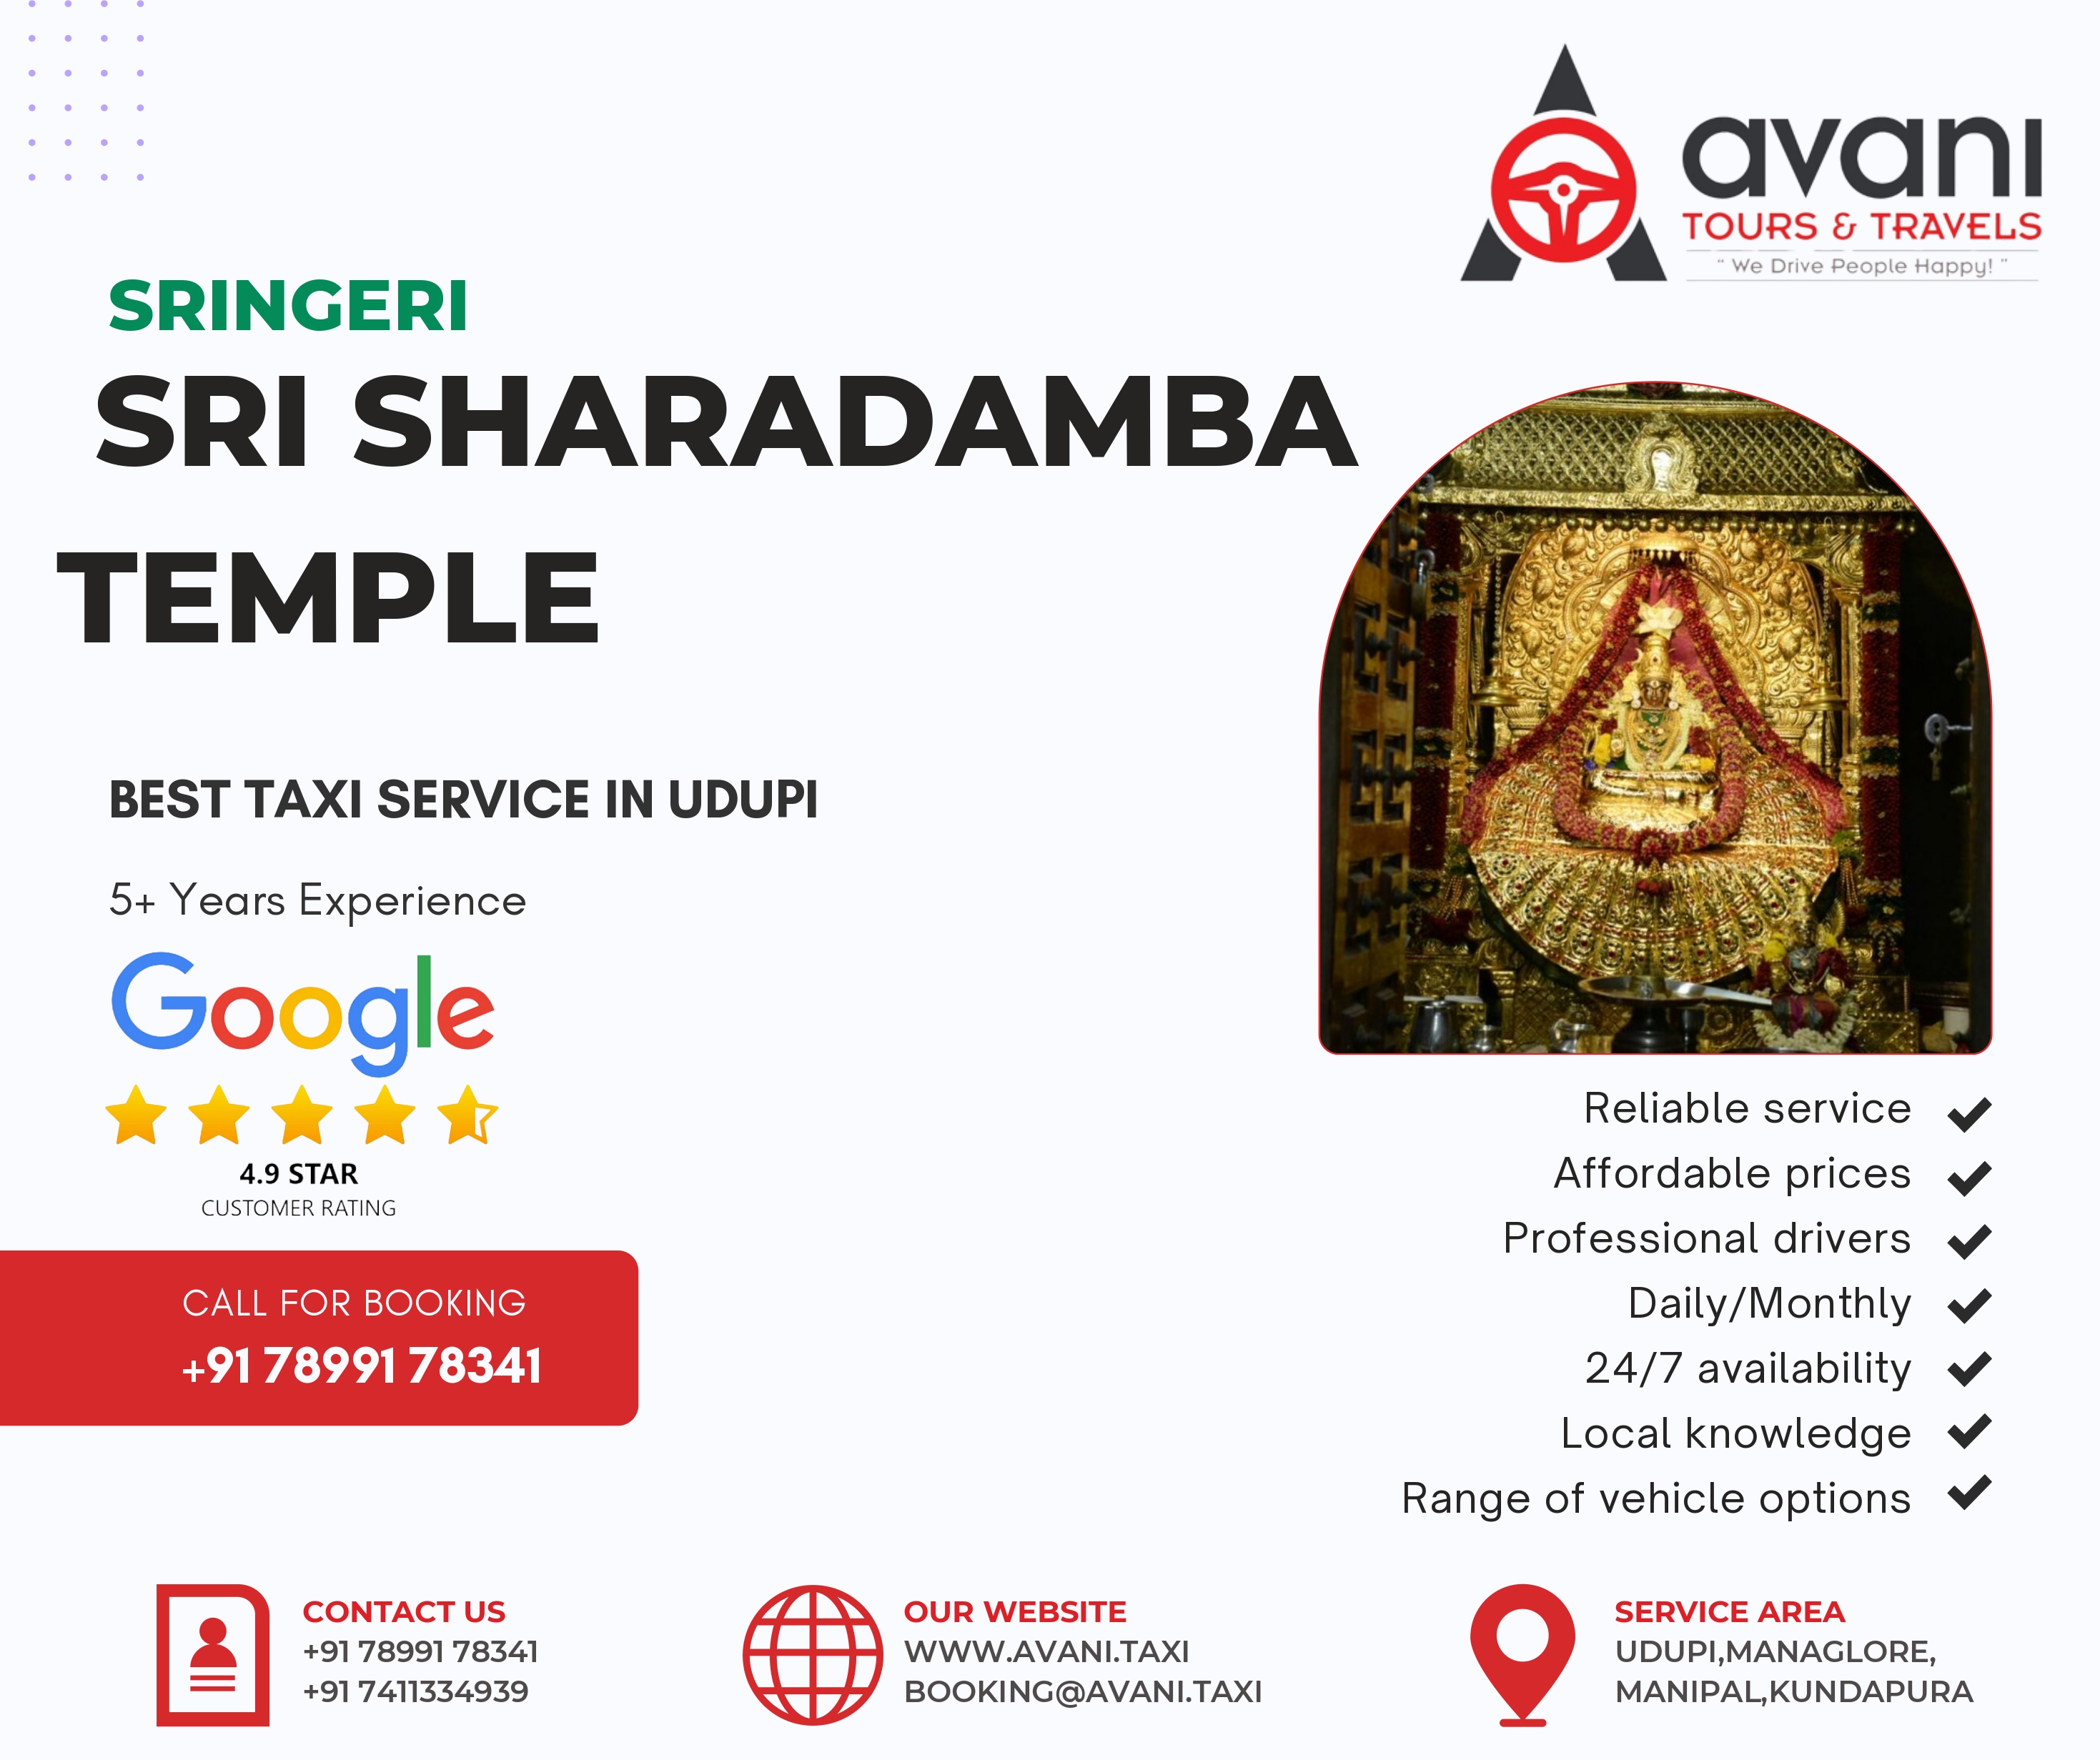 The Sri Sharadamba Temple | Avani Tours And Travels